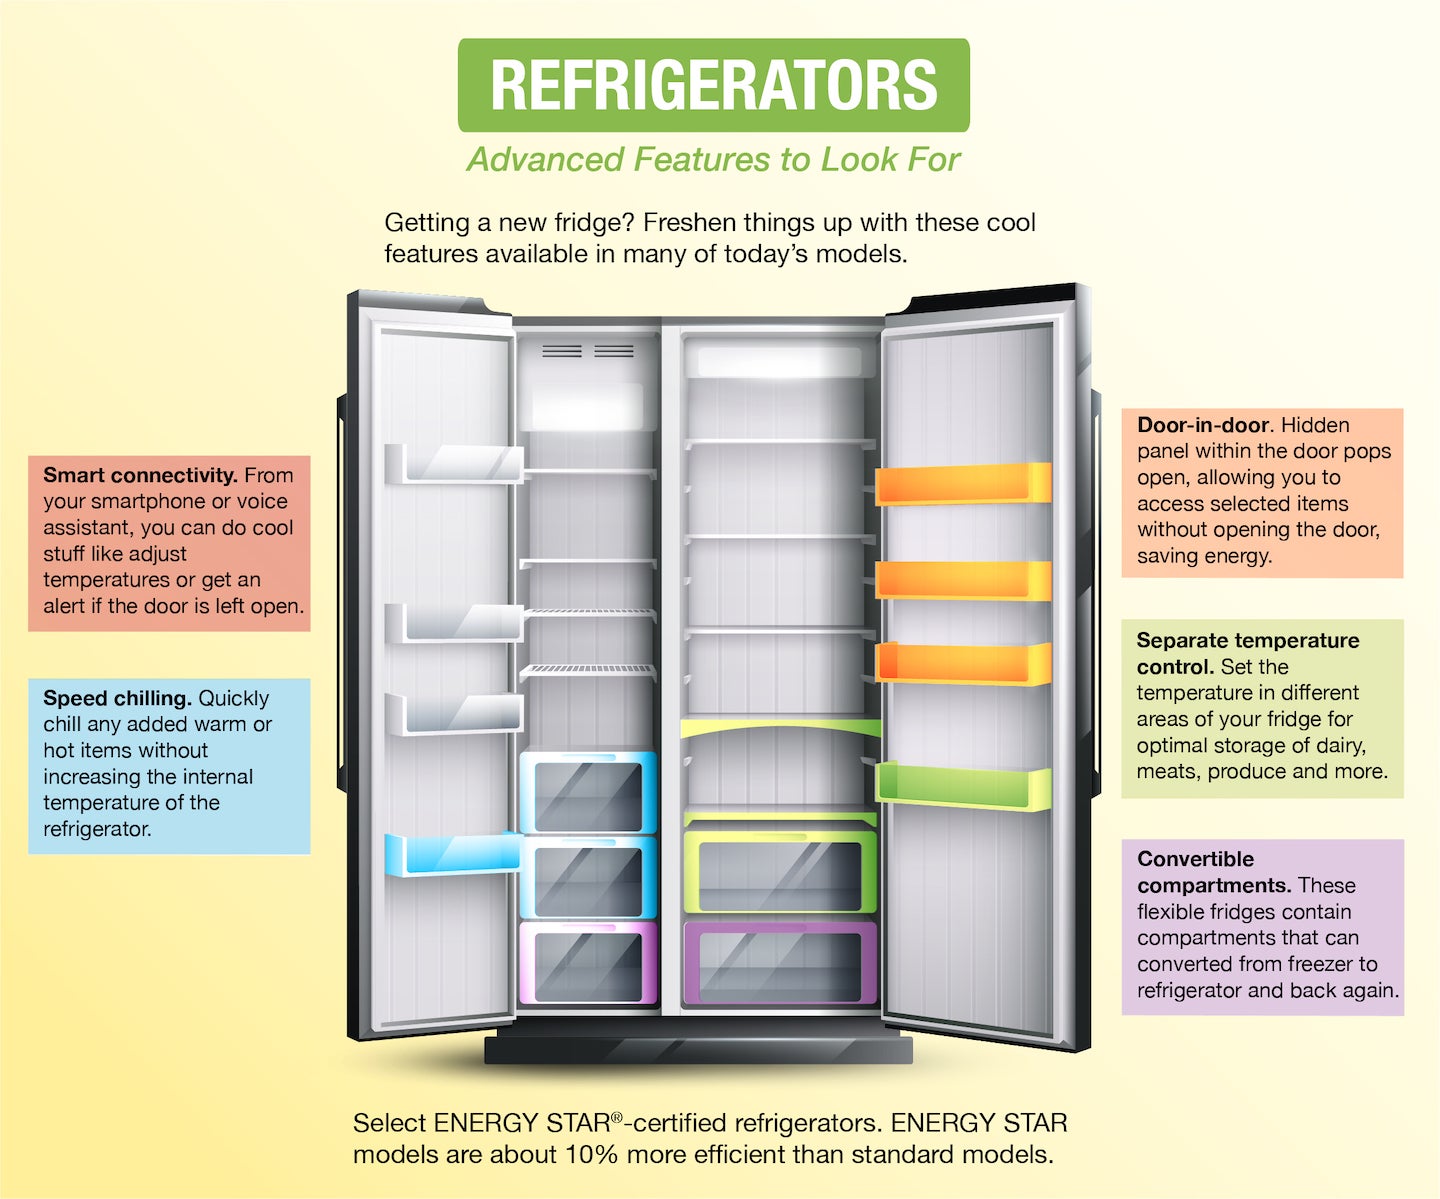 New efficient refrigerator features